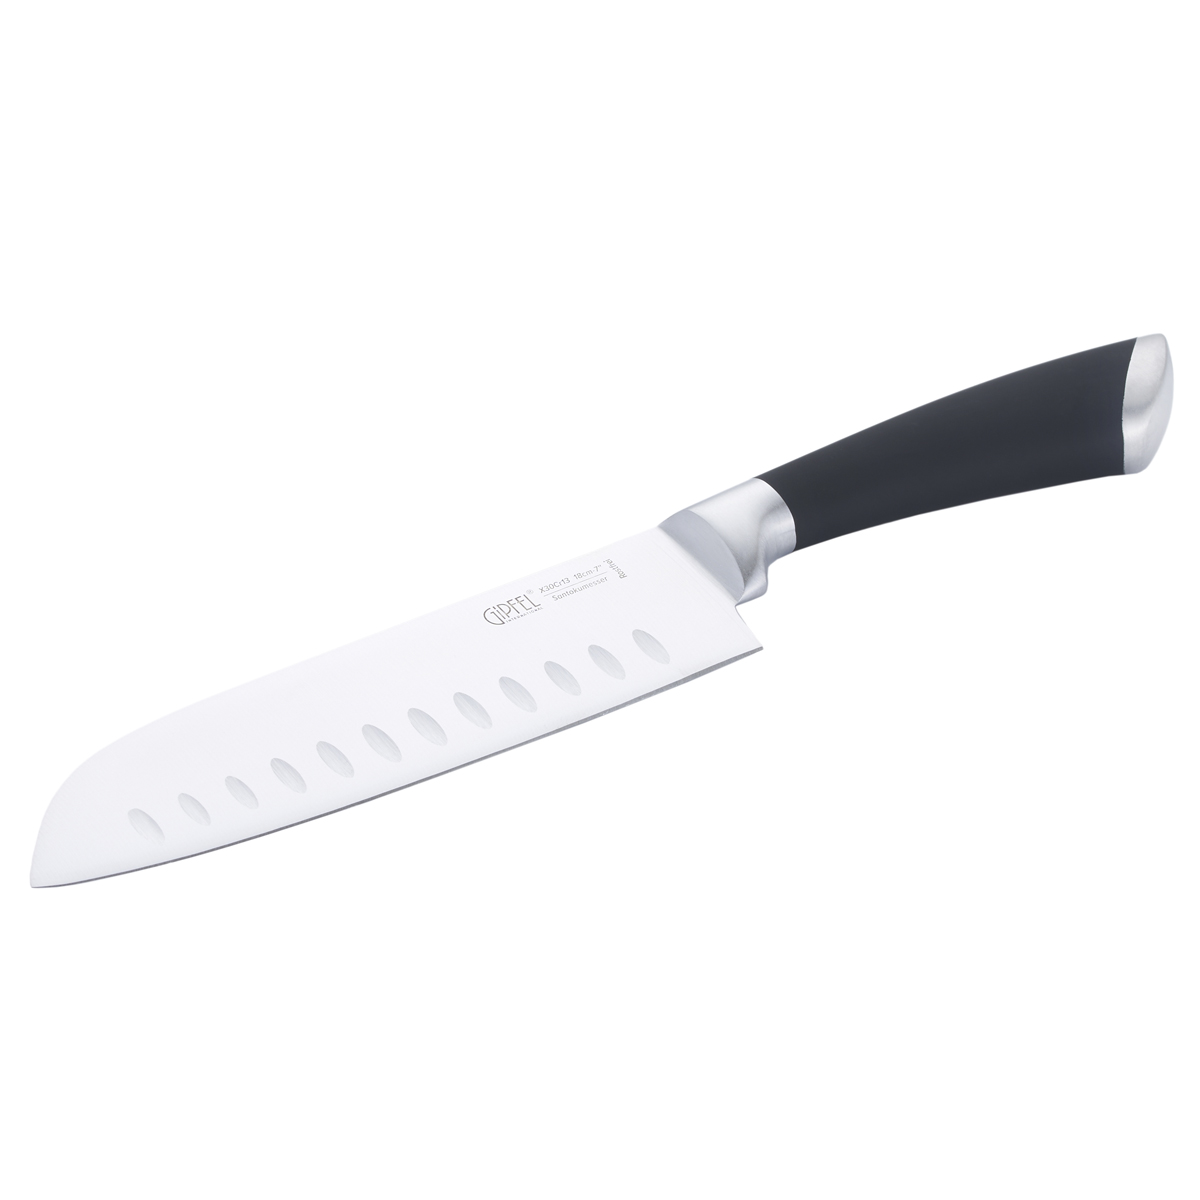 Нож поварской сантоку Gipfel Turino 51012 18 см фото